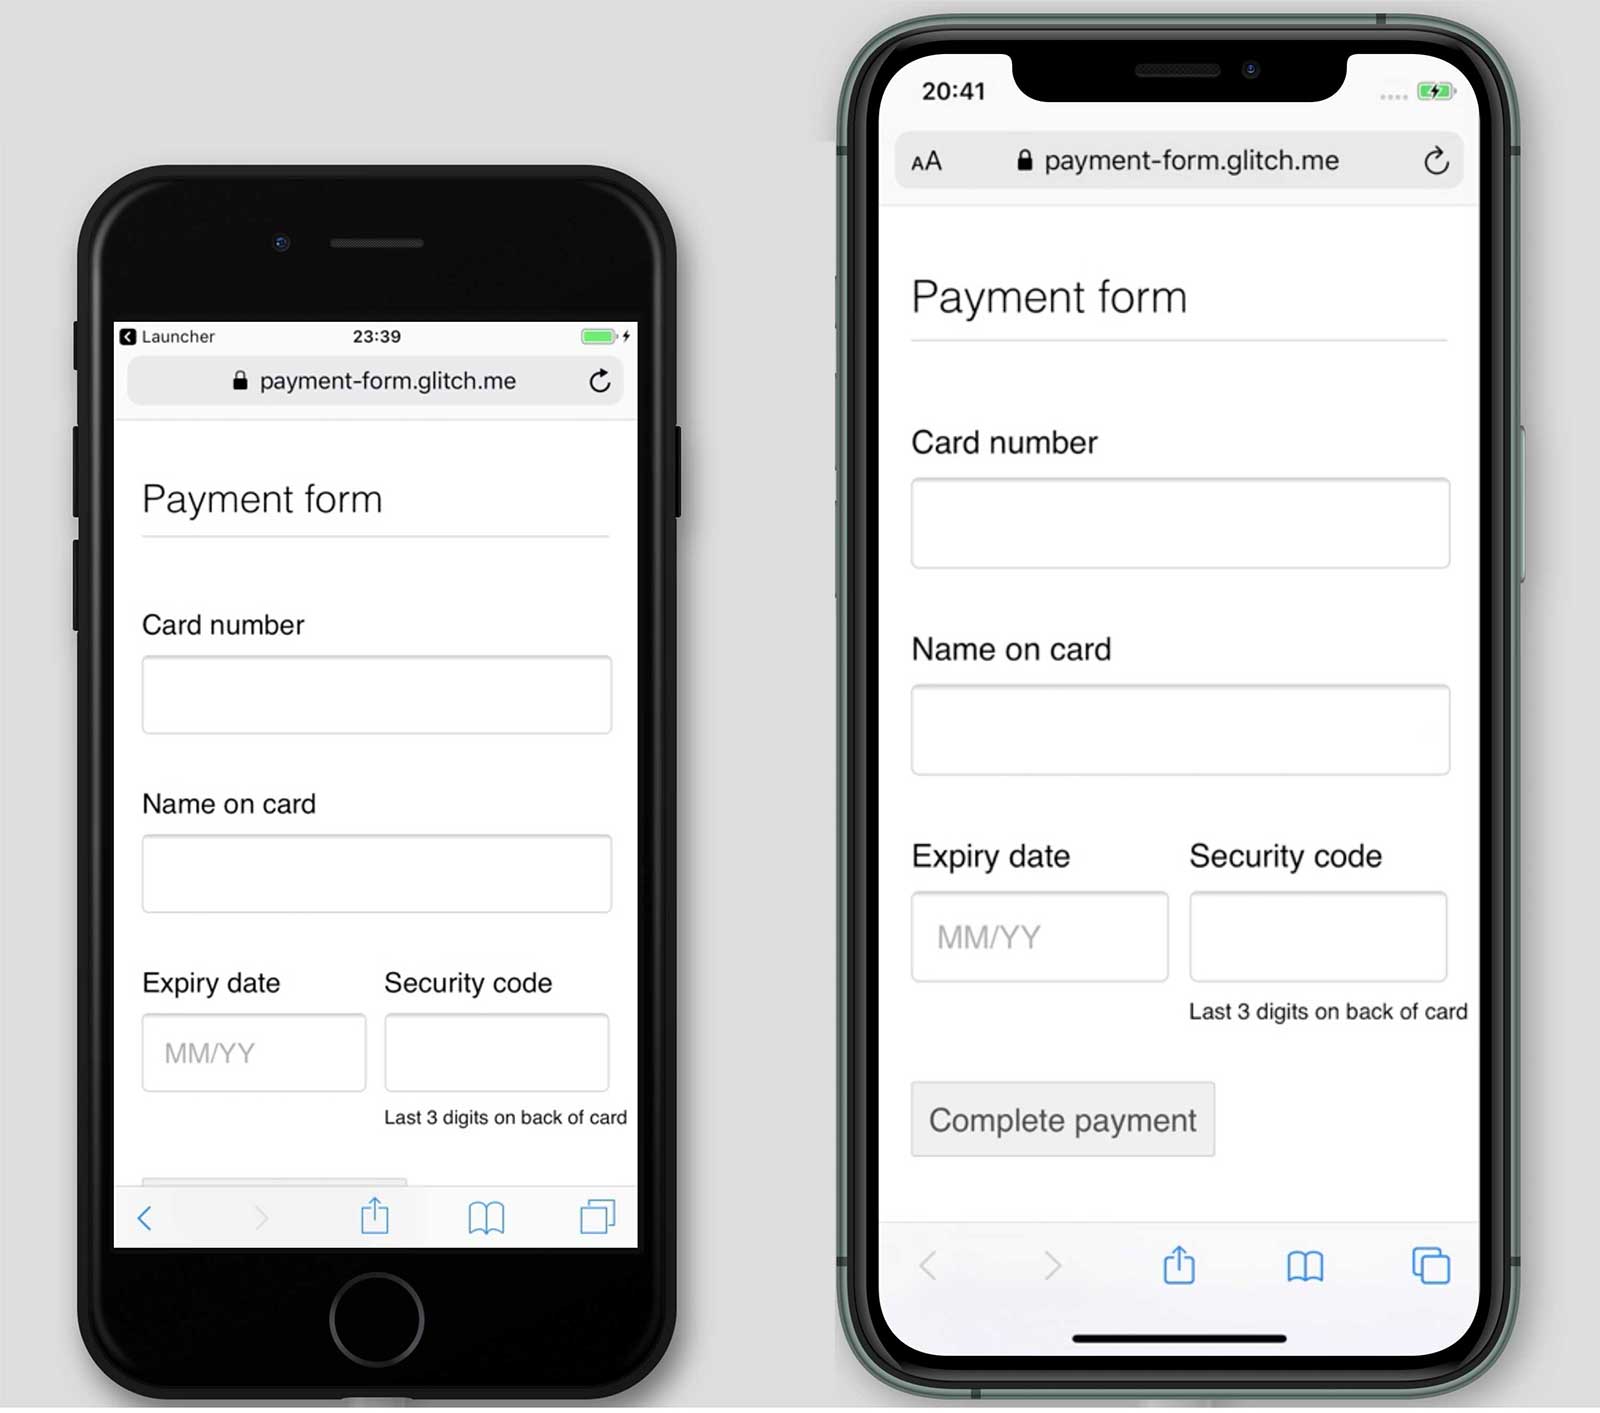 iPhone 7 和 11 上付款表单 pay-form.glitch.me 的屏幕截图。iPhone 11 上显示了“完成付款”按钮，但在 iPhone 7 上不显示